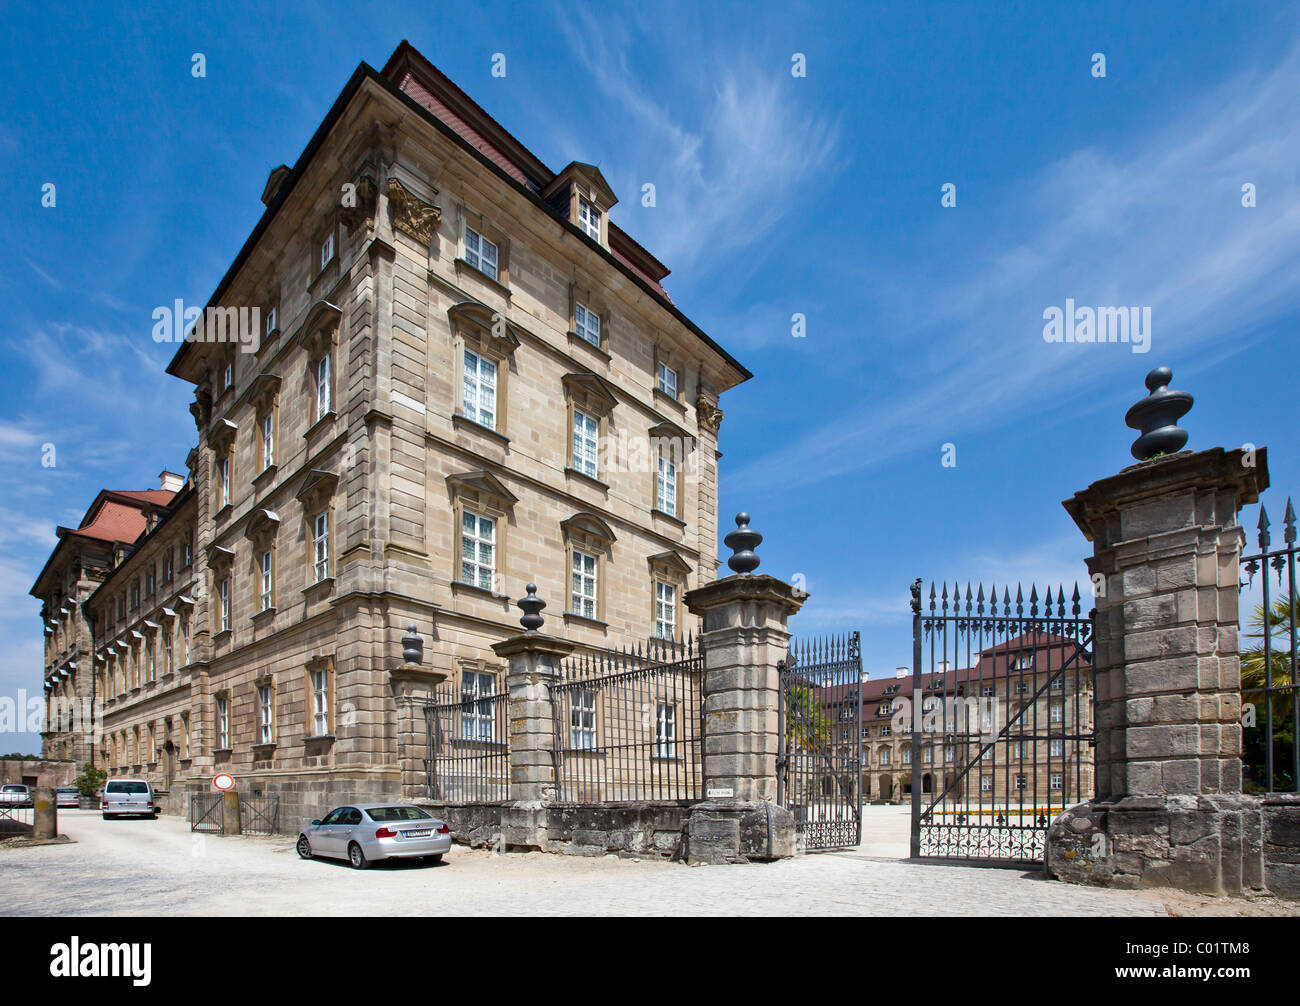 Schloss Weissenstein Palace, built 1711-1718 under Lothar Franz von Schoenborn, Elector of Mainz, Franconian Baroque Stock Photo